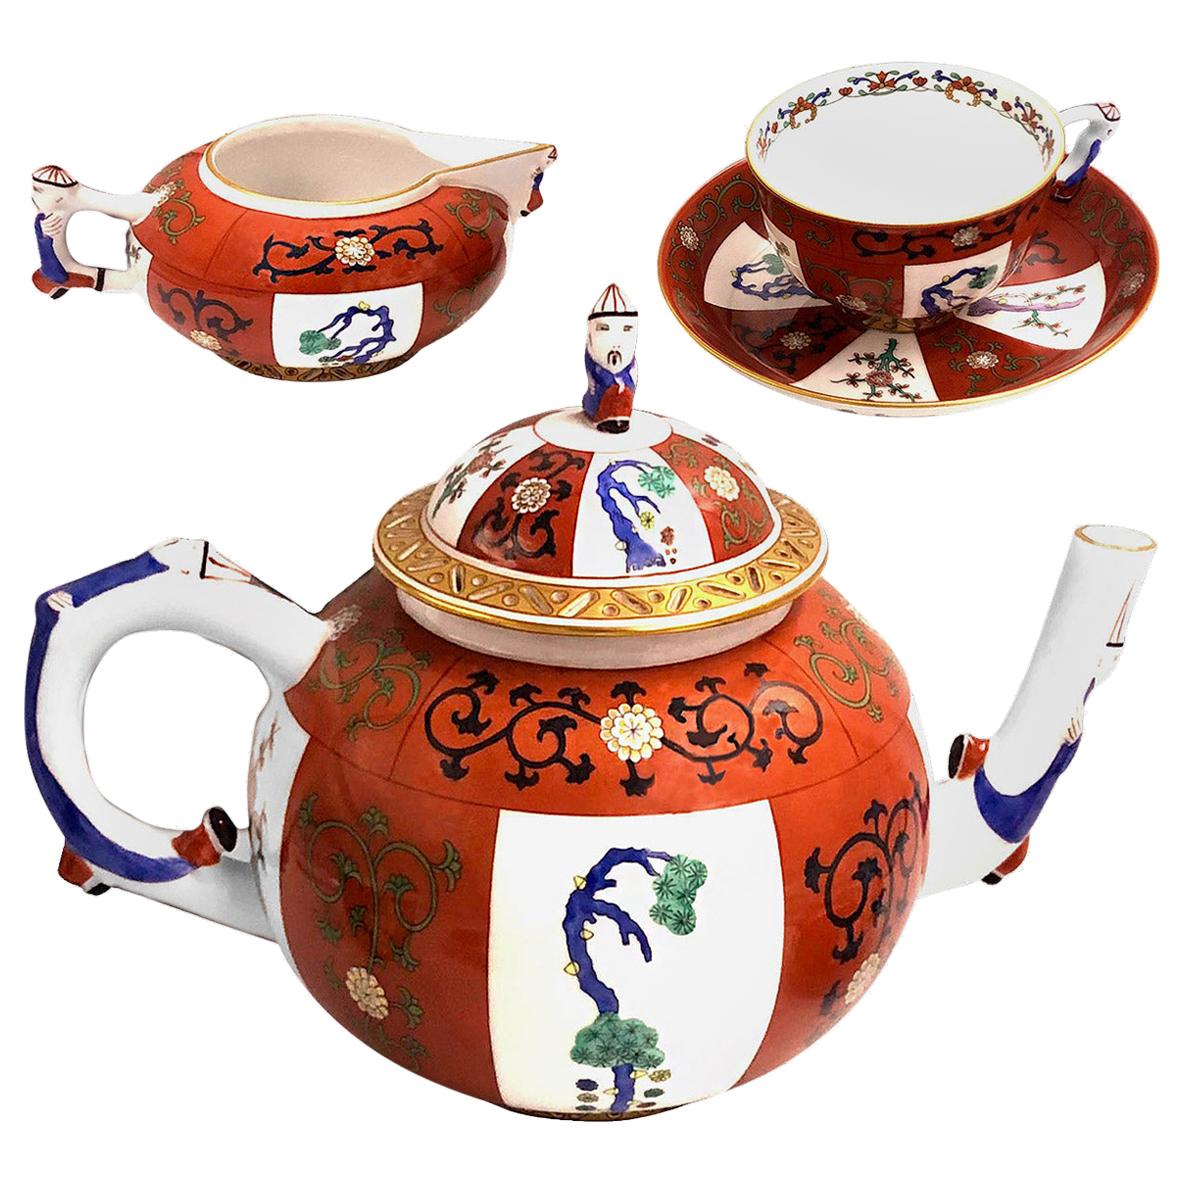 Godollo Tea Set in Herend Porcelain for Famous Queen Elizabeth